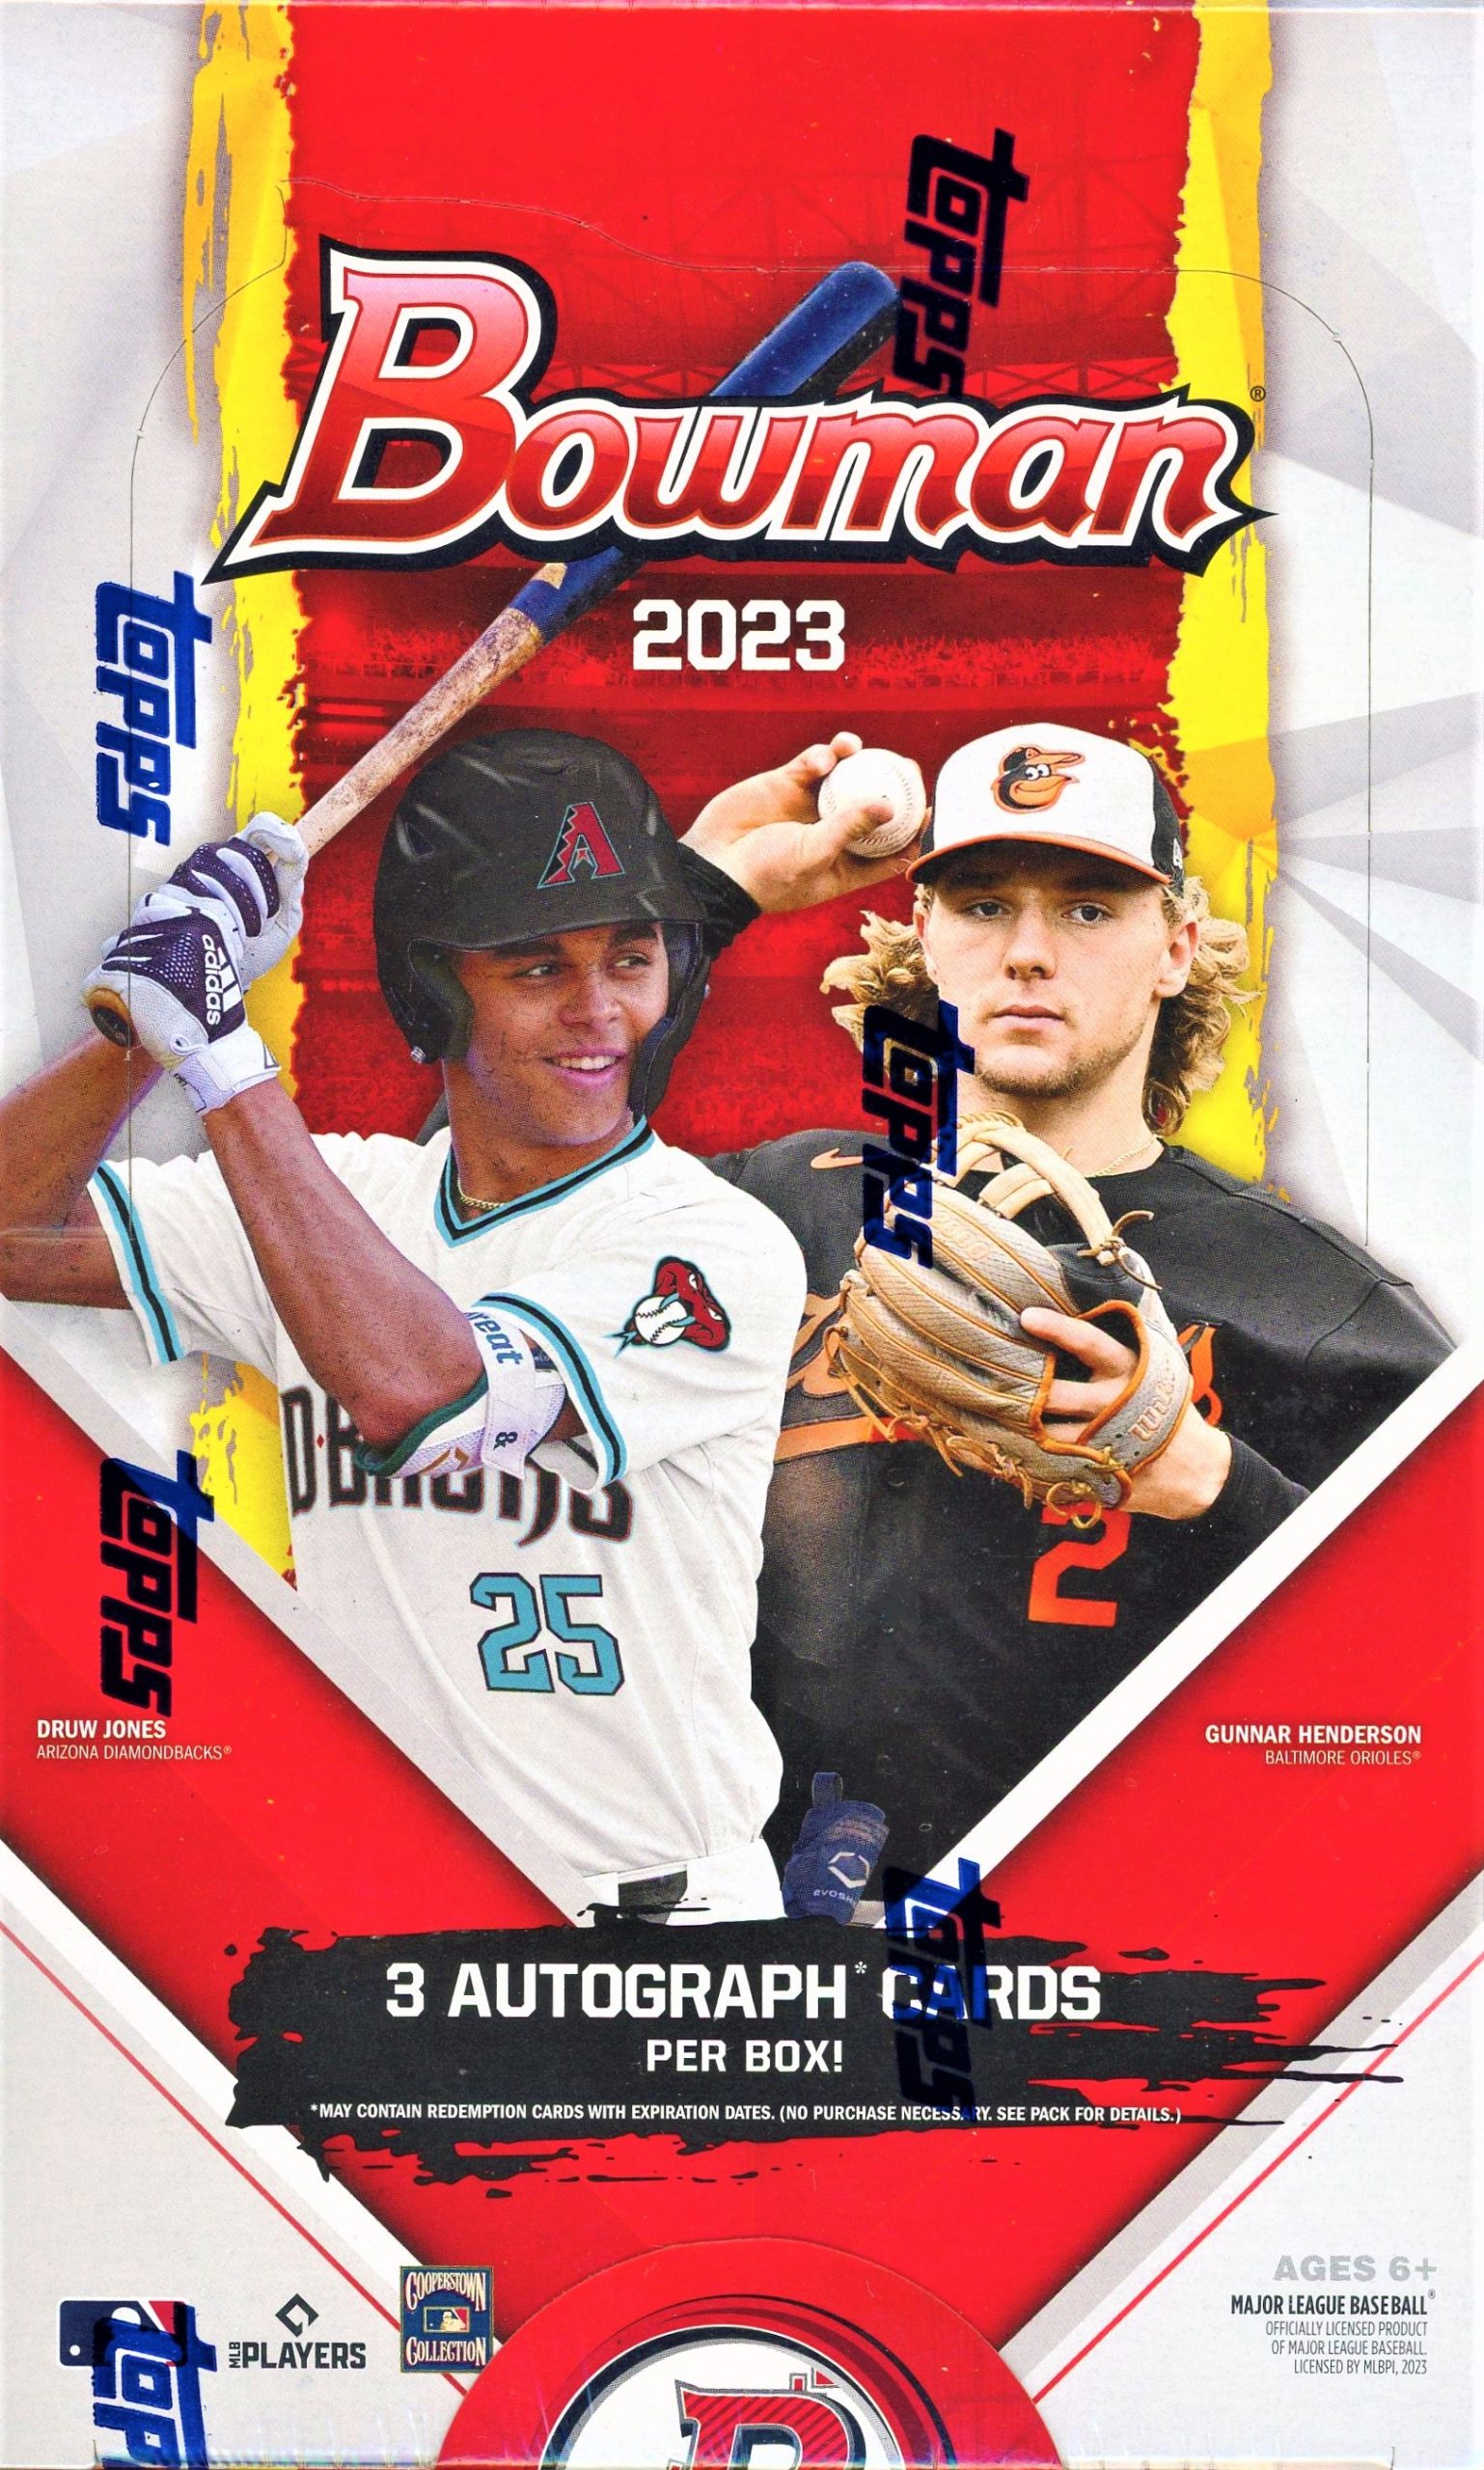 ⚾ MLB 2023 TOPPS BOWMAN BASEBALL JUMBO【製品情報】 | Trading Card